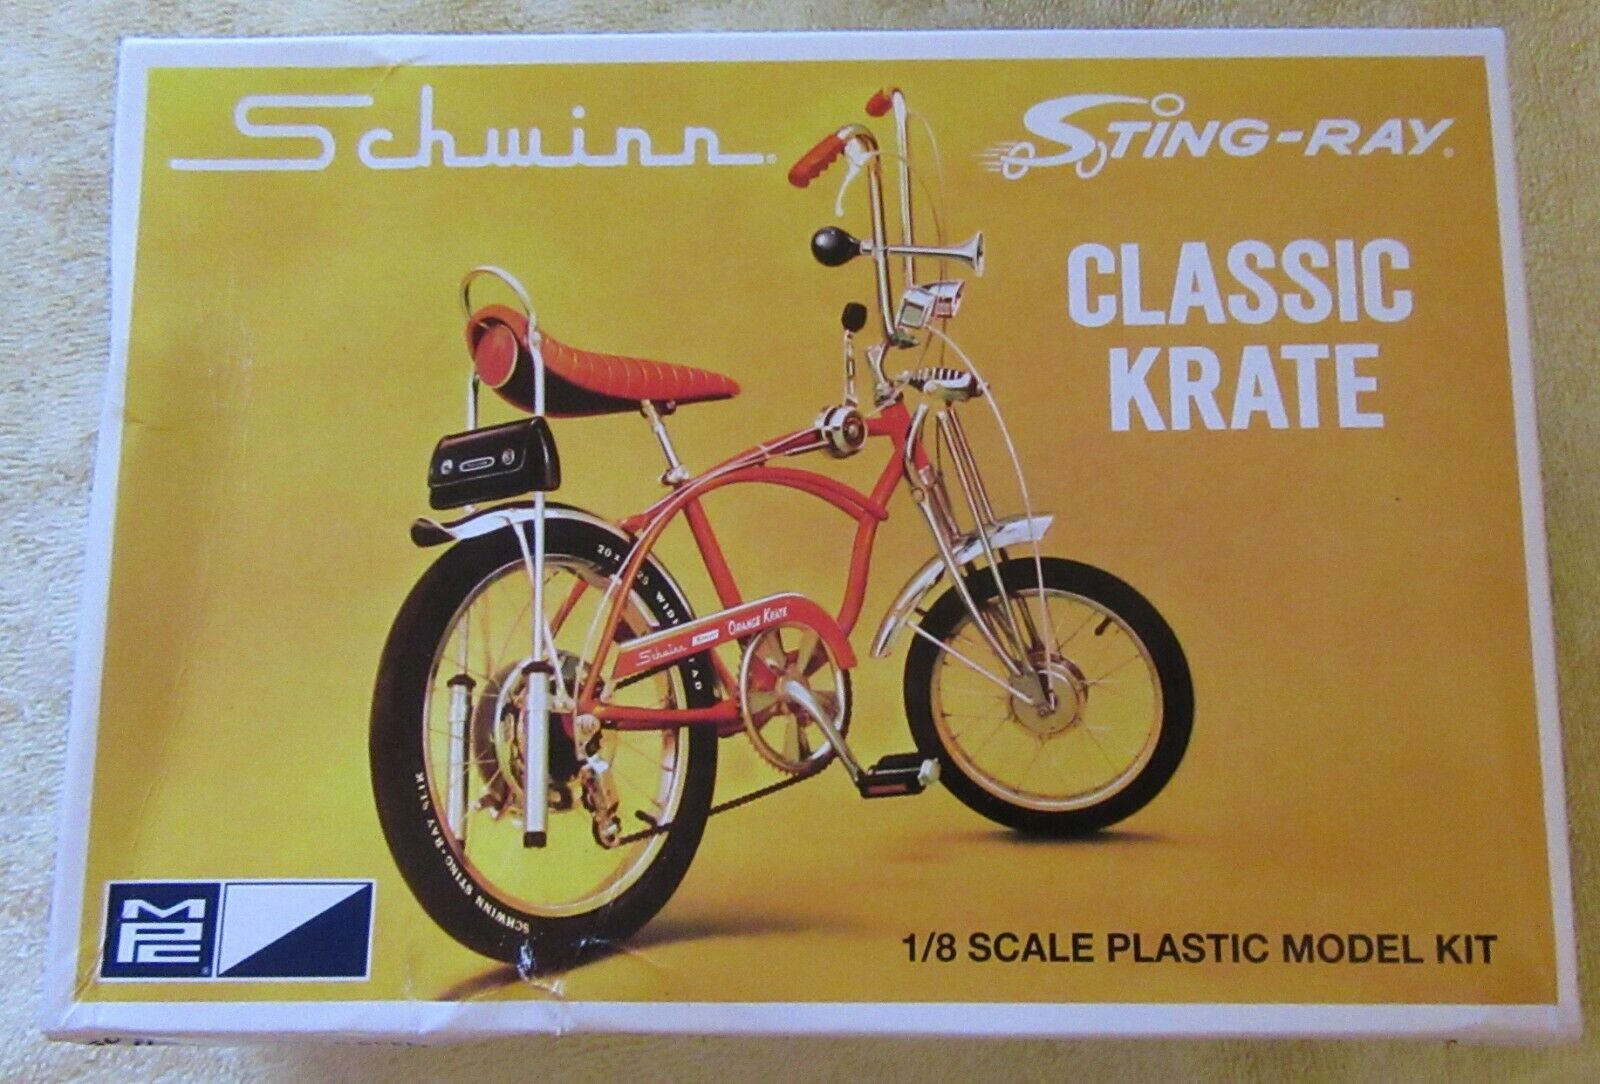 Mpc 914 Schwinn Sting-ray Classic Krate Bike (orange) Model Kit 1/8 Open Box